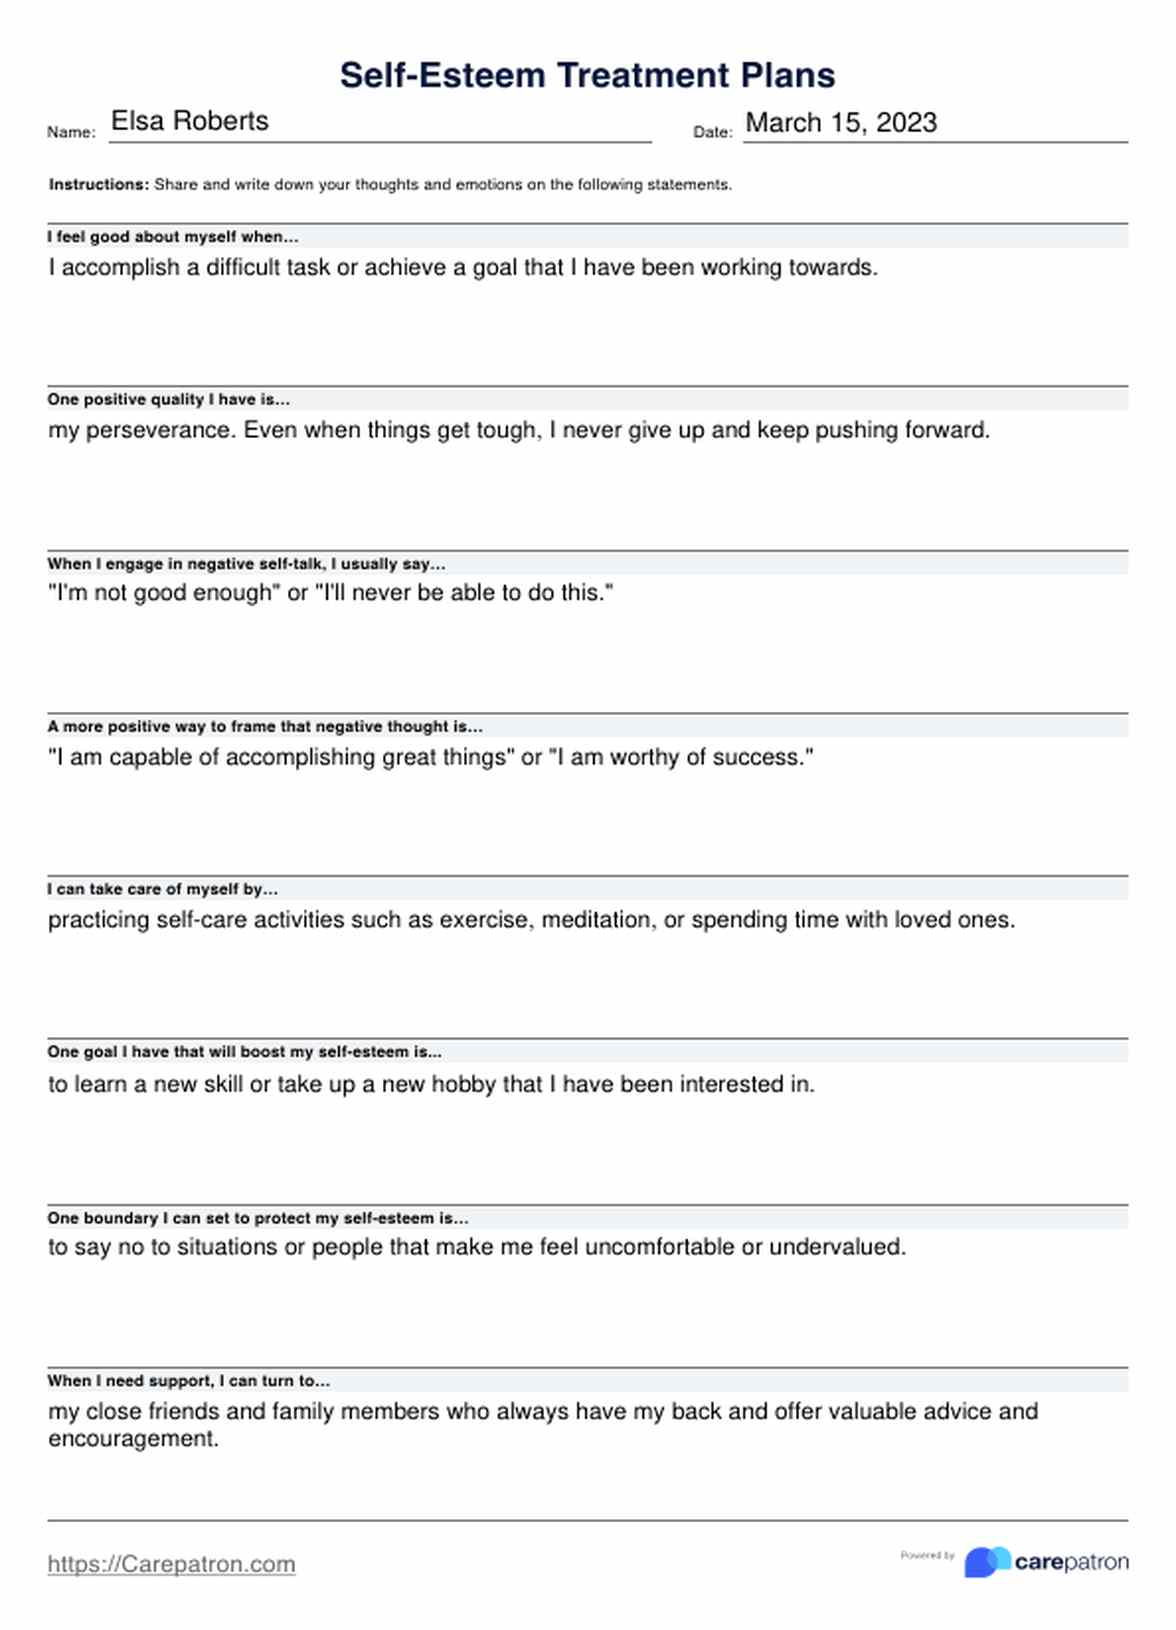 Self-Esteem Treatment Plans PDF Example